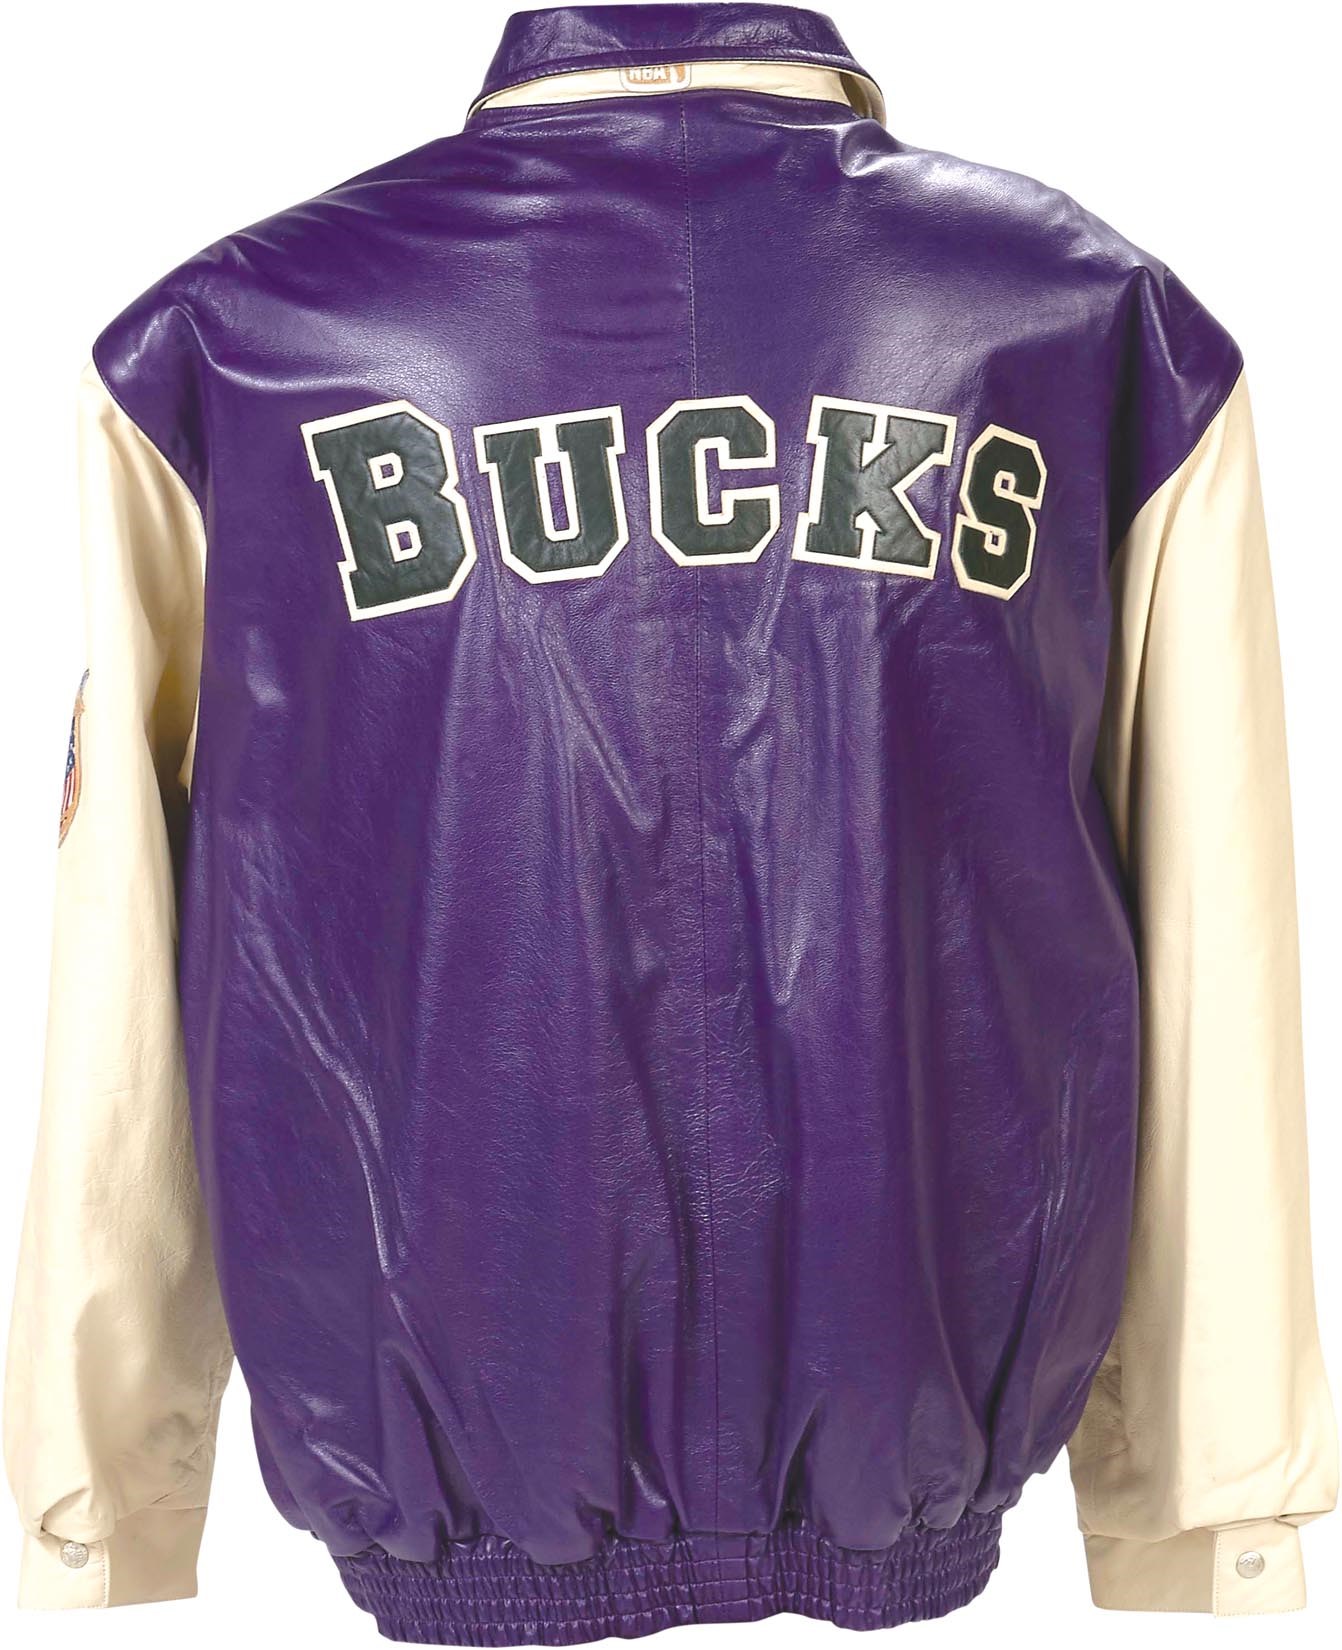 The Oscar Robertson Collection - Oscar Robertson NBA 50 Greatest Players Jacket and Photograph (Milwaukee Bucks)